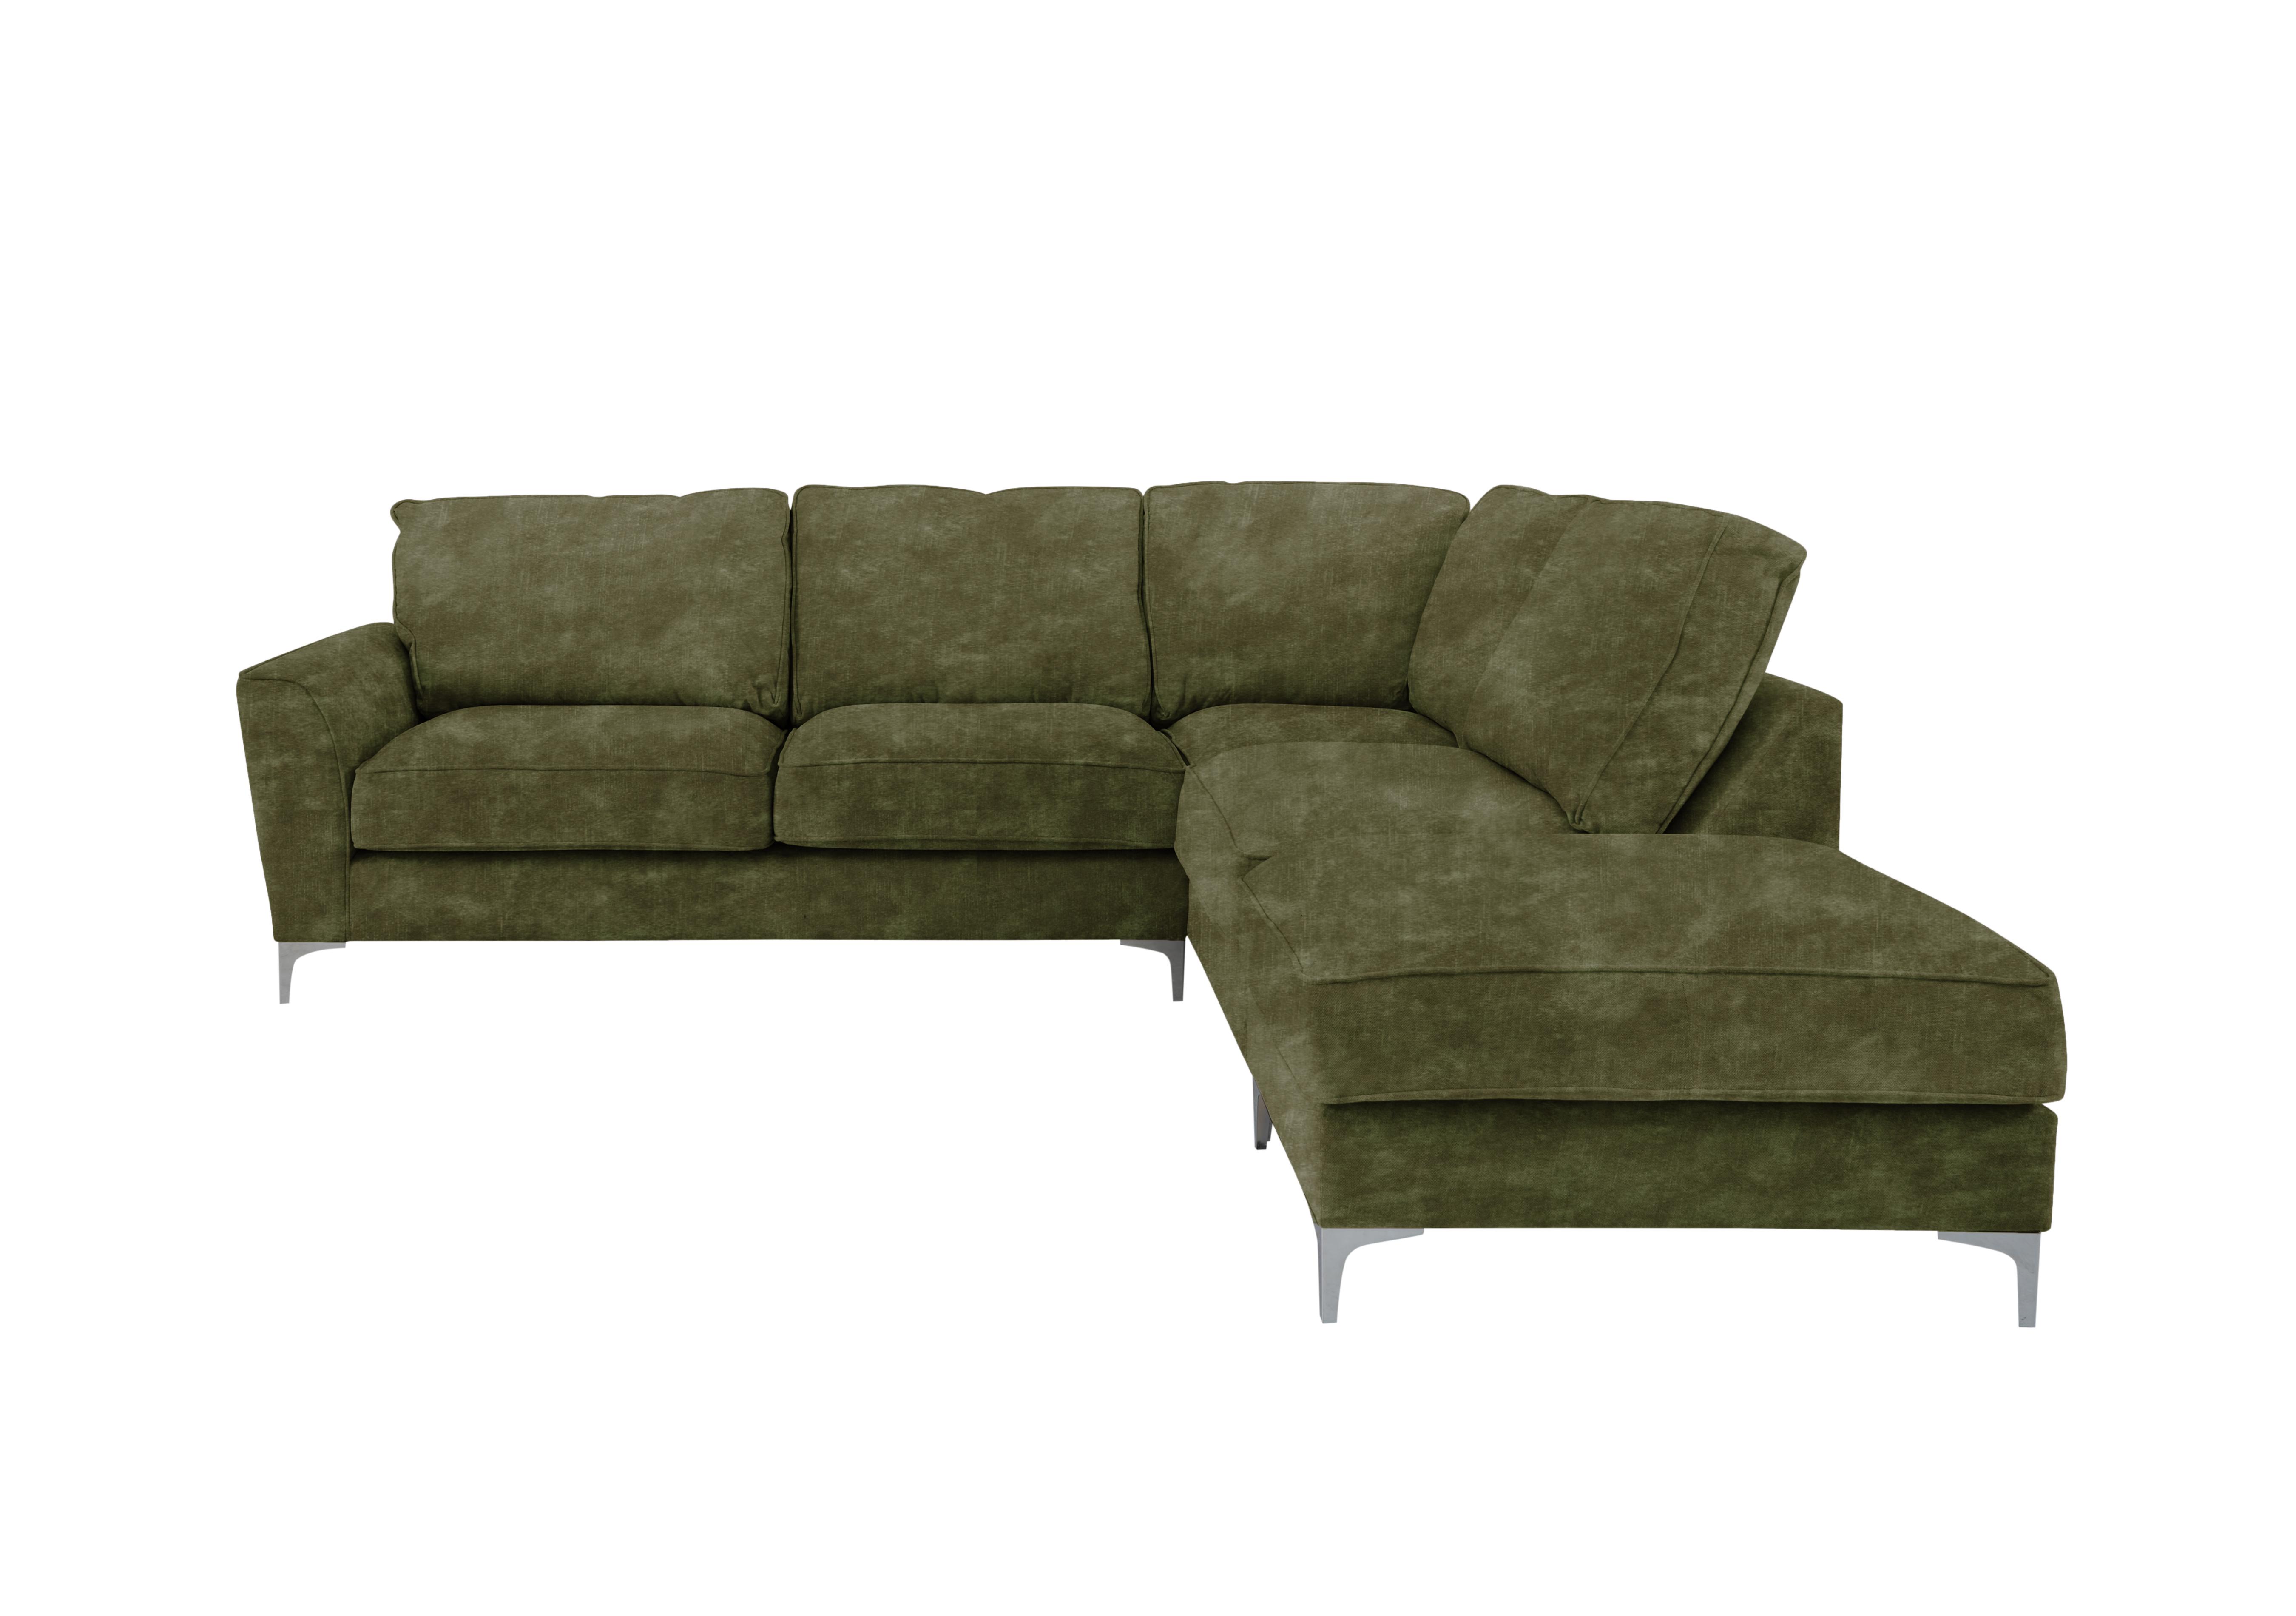 Legend Classic Back Fabric Corner Sofa in Sublime Olive on Furniture Village